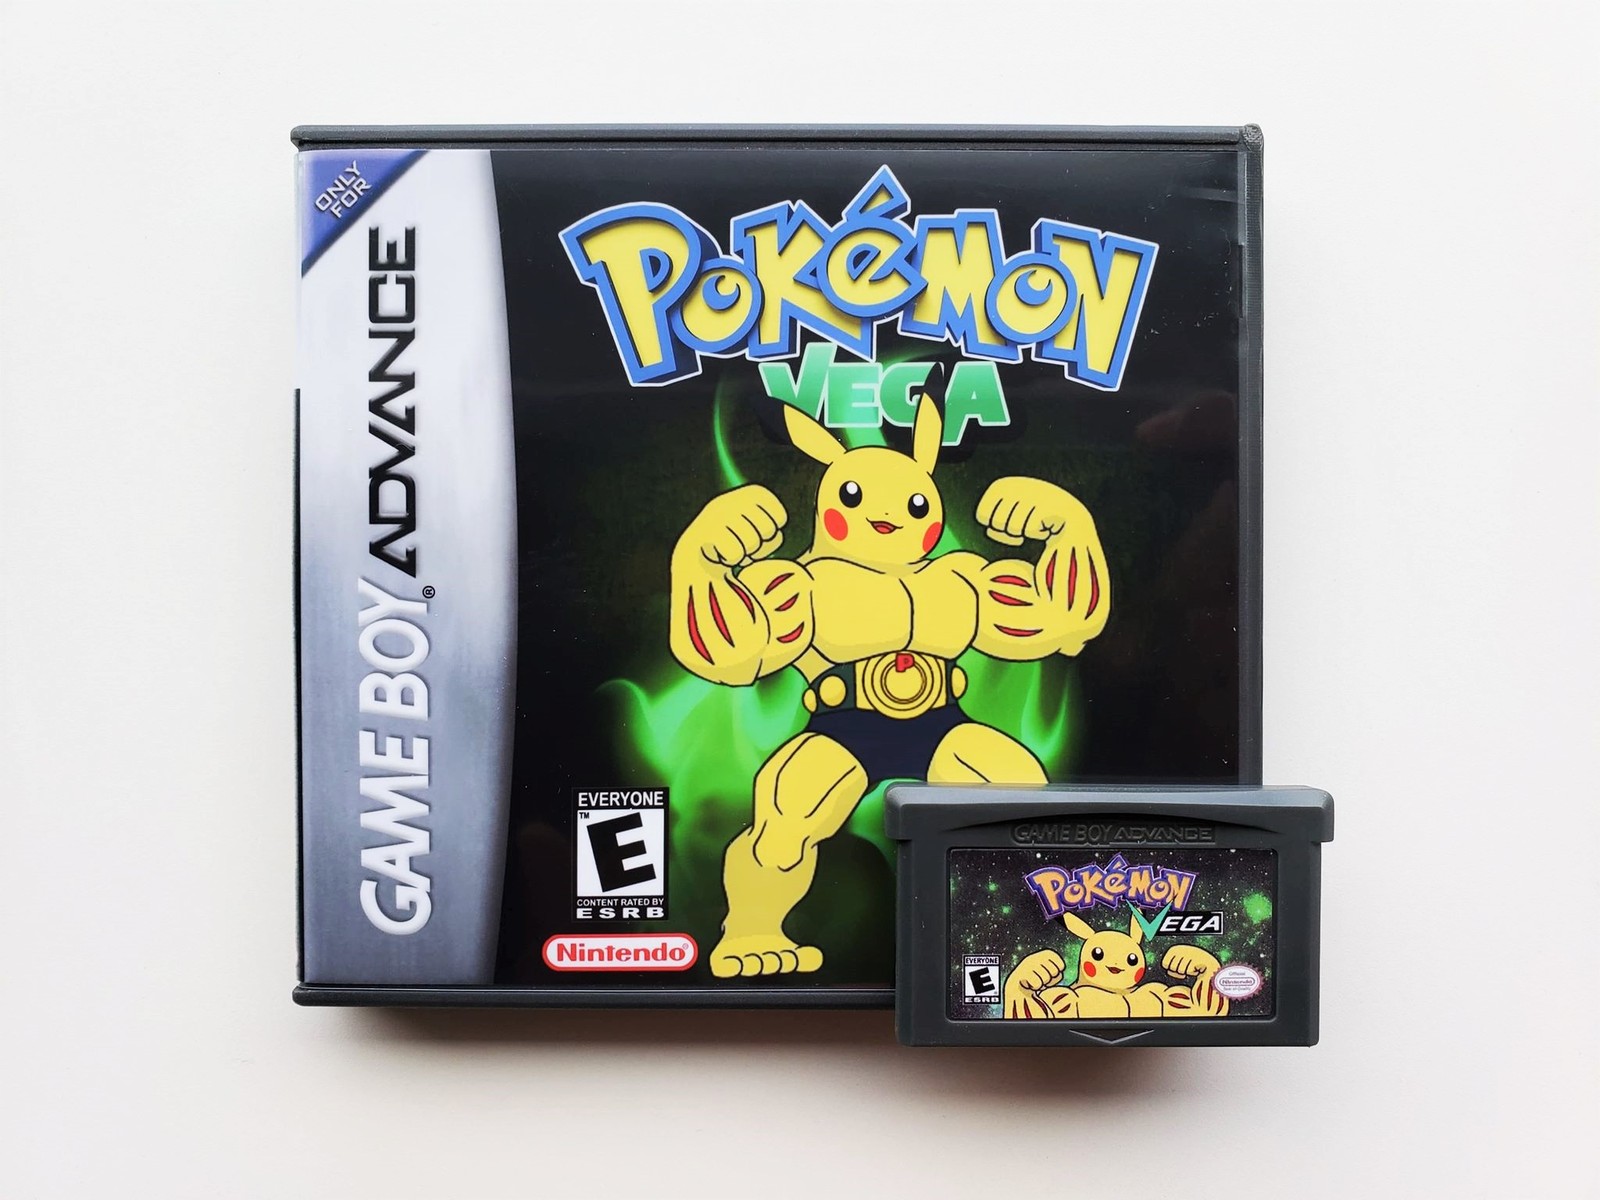 Pokemon Vega - Game / Case - Gameboy Advance (GBA) USA Seller